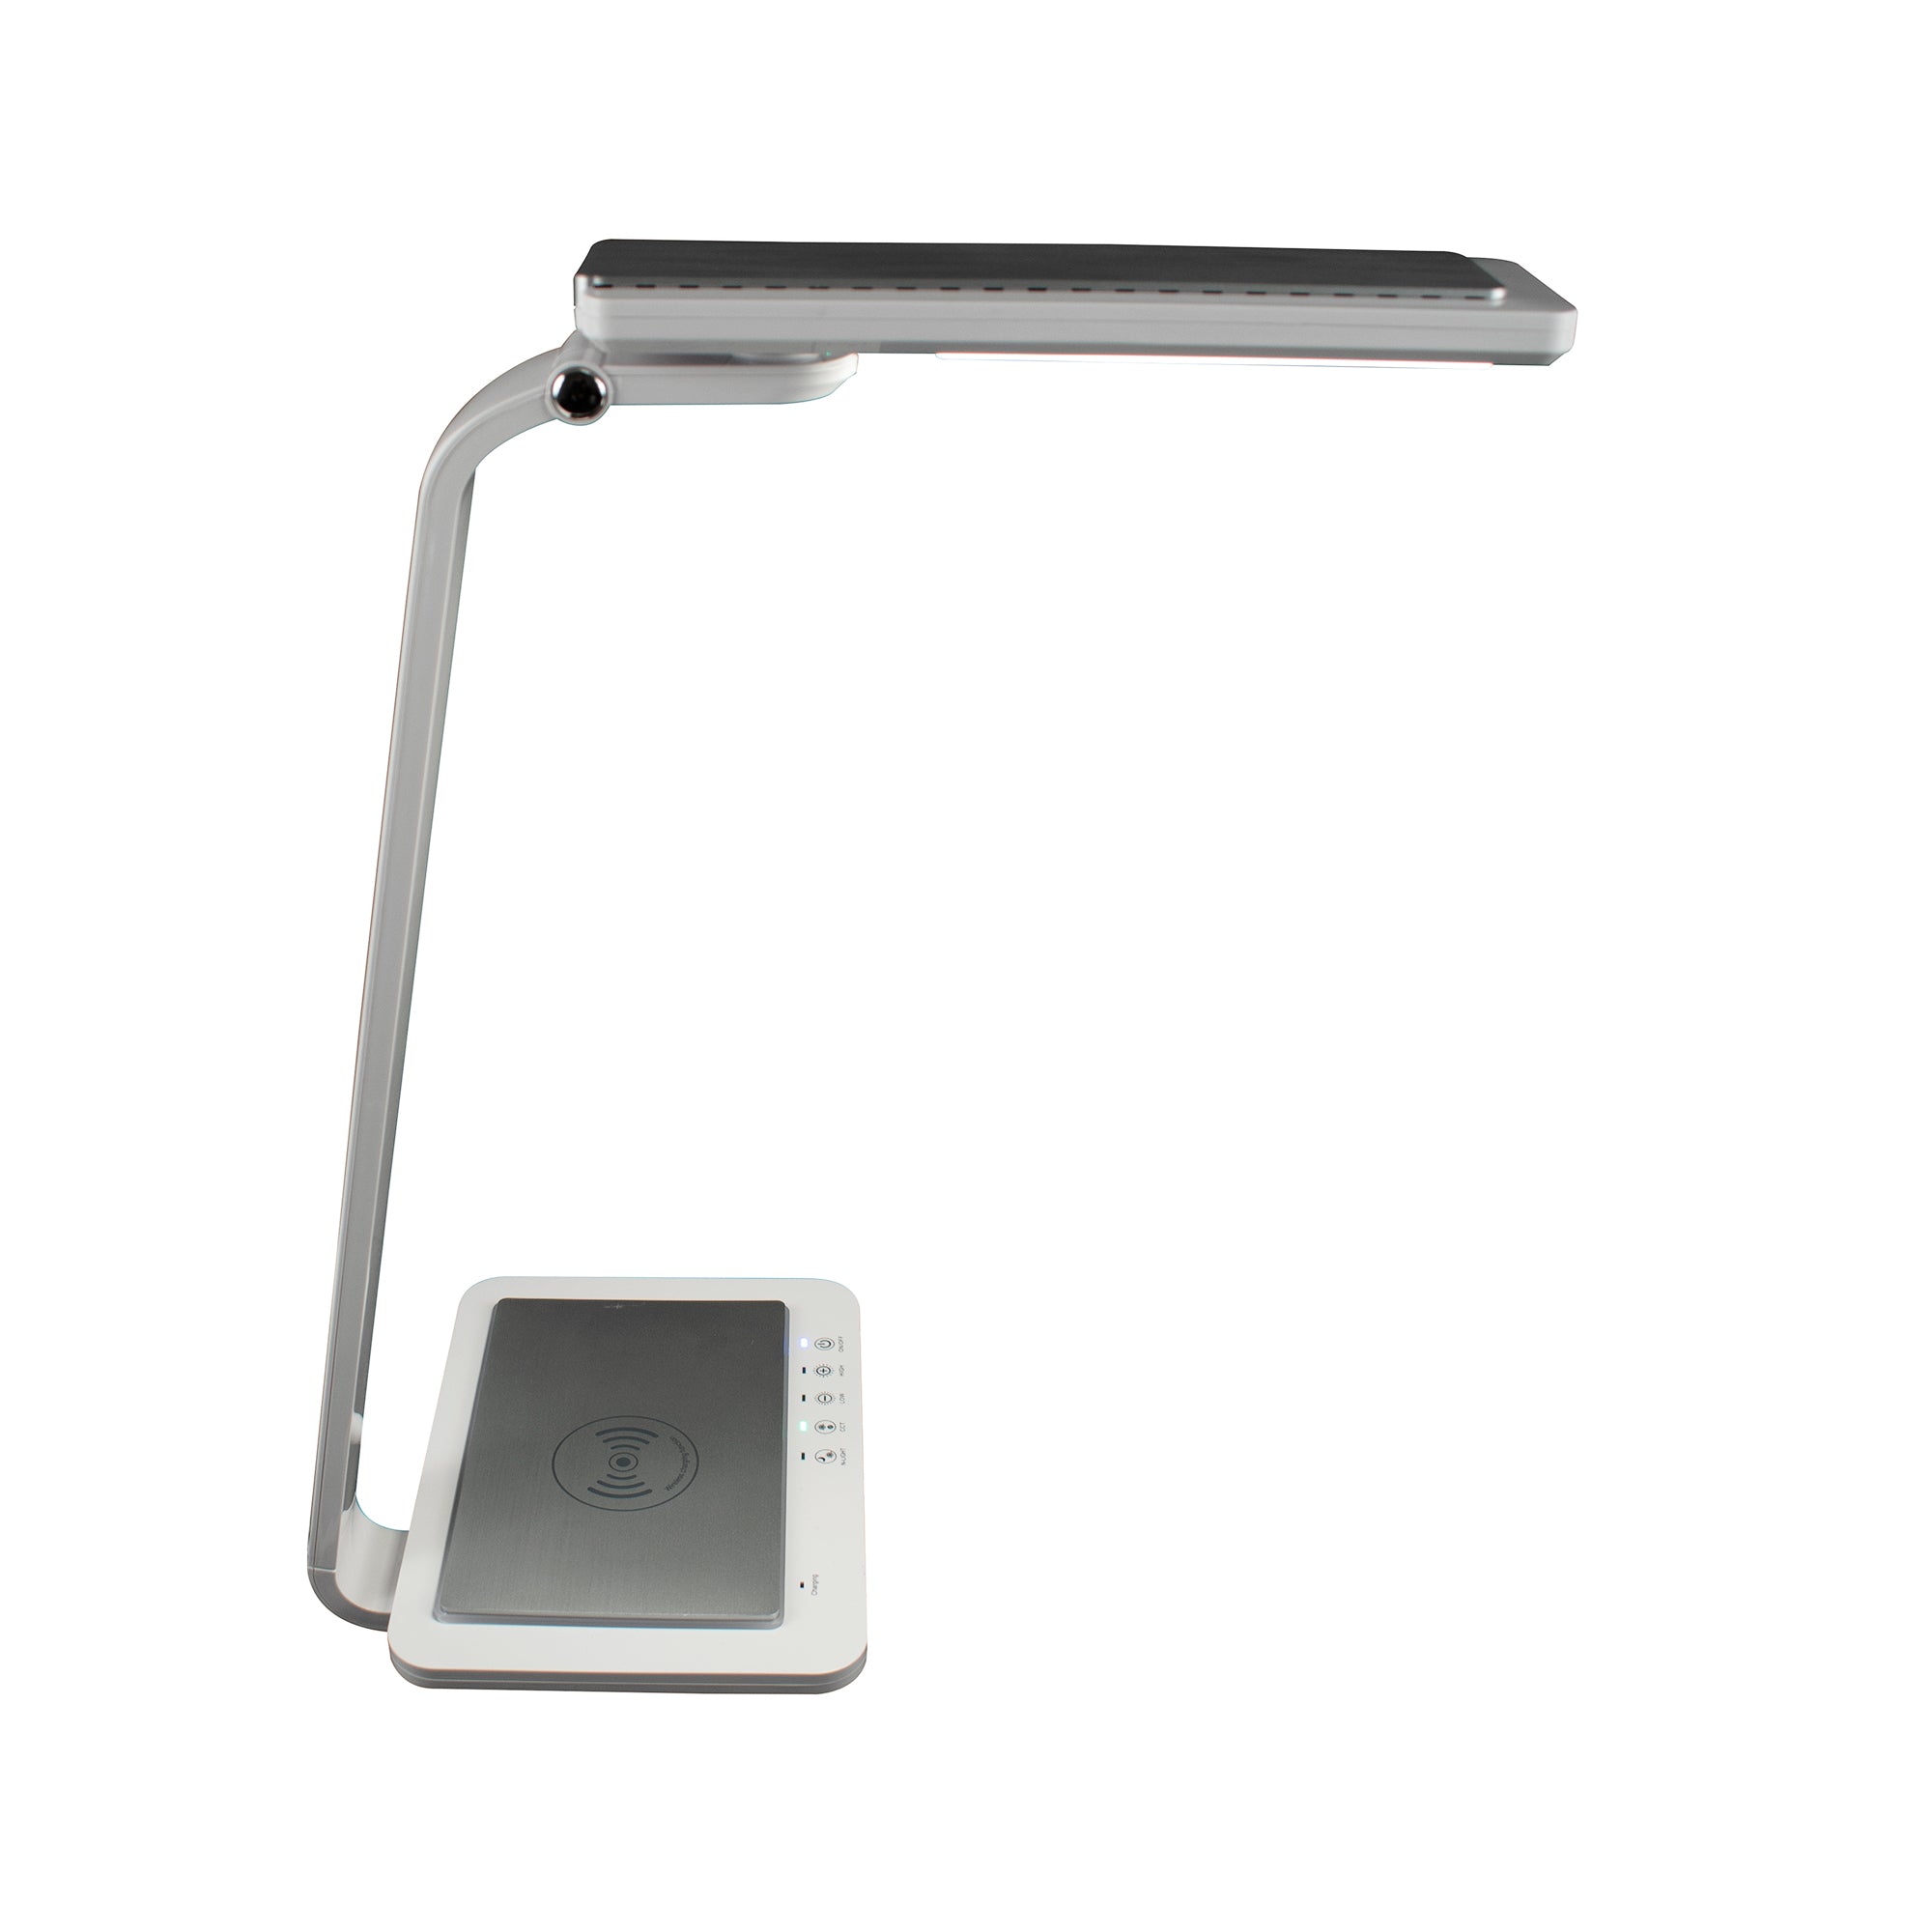 RDL-140Qi, LED Desk Lamp, Qi Wireless Charging Stand